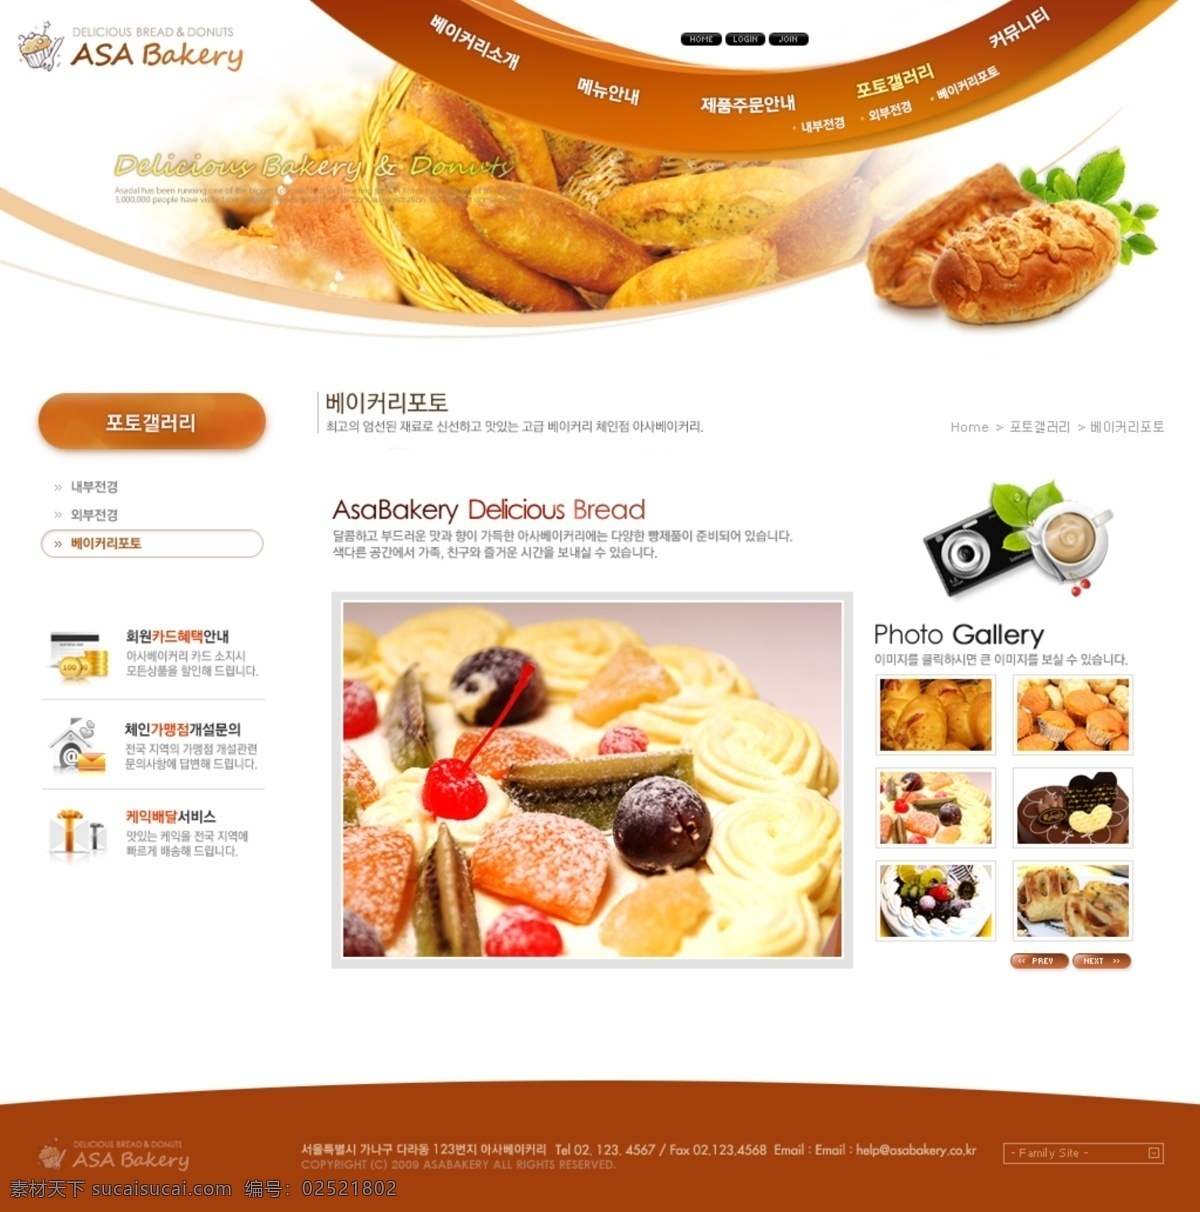 psd源文件 蛋糕 韩国模板 黄色 咖啡 绿叶 面包 食品网页模板 相机 棕红色 棕色 网页模板 源文件 网页素材